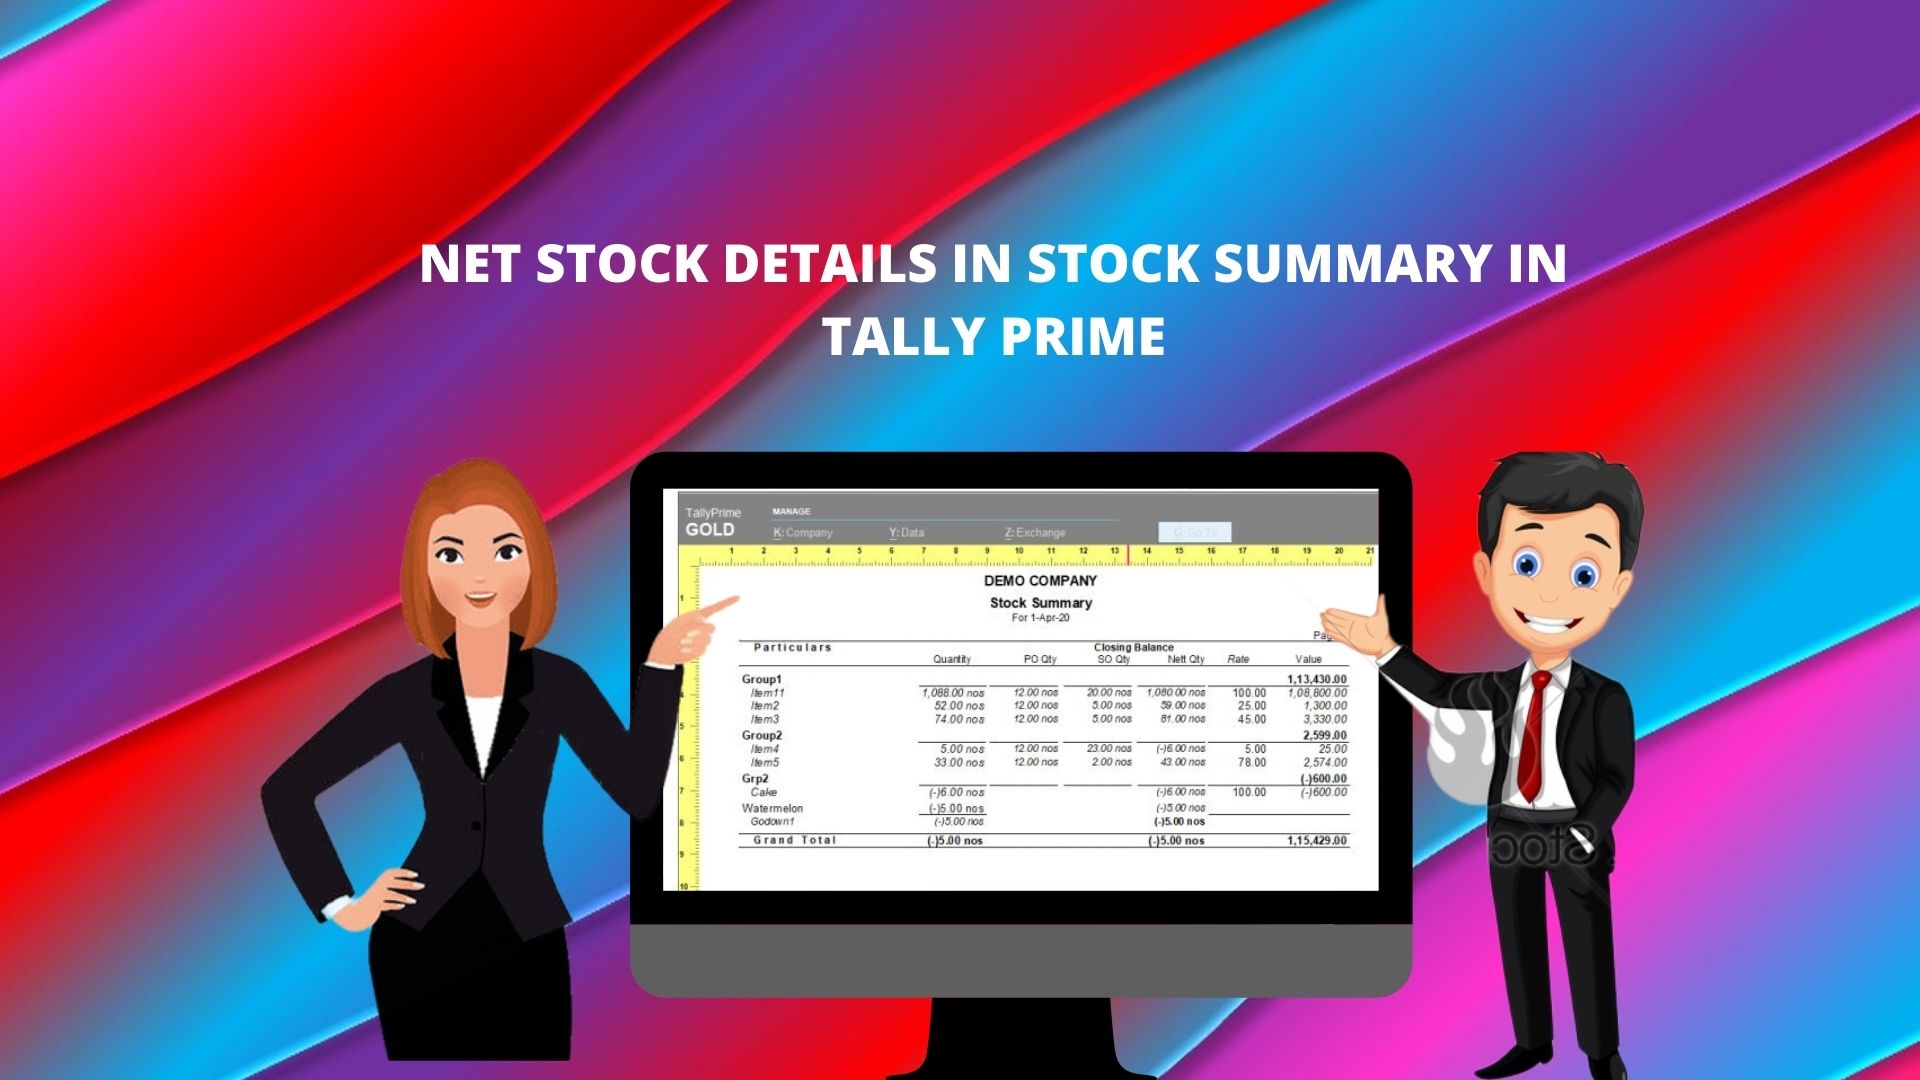 NETT STOCK DETAILS IN STOCK SUMMARY